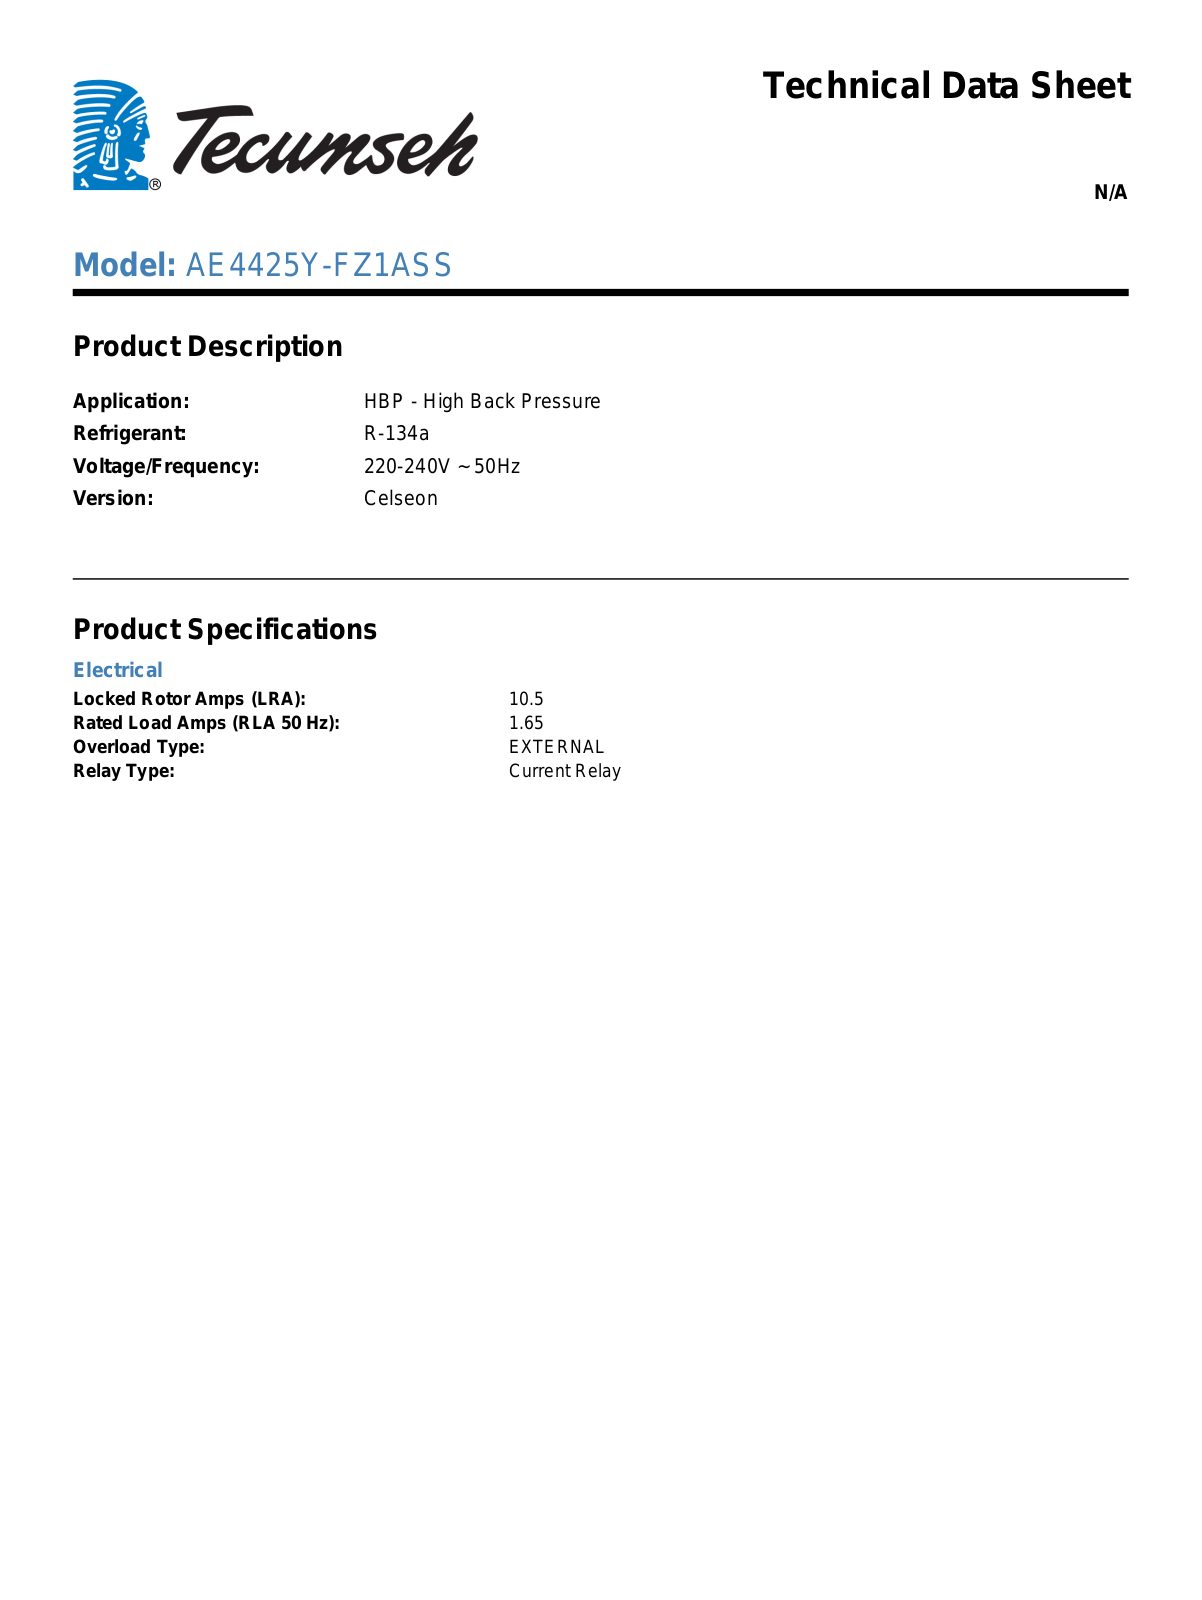 Tecumseh AE4425Y-FZ1ASS User Manual